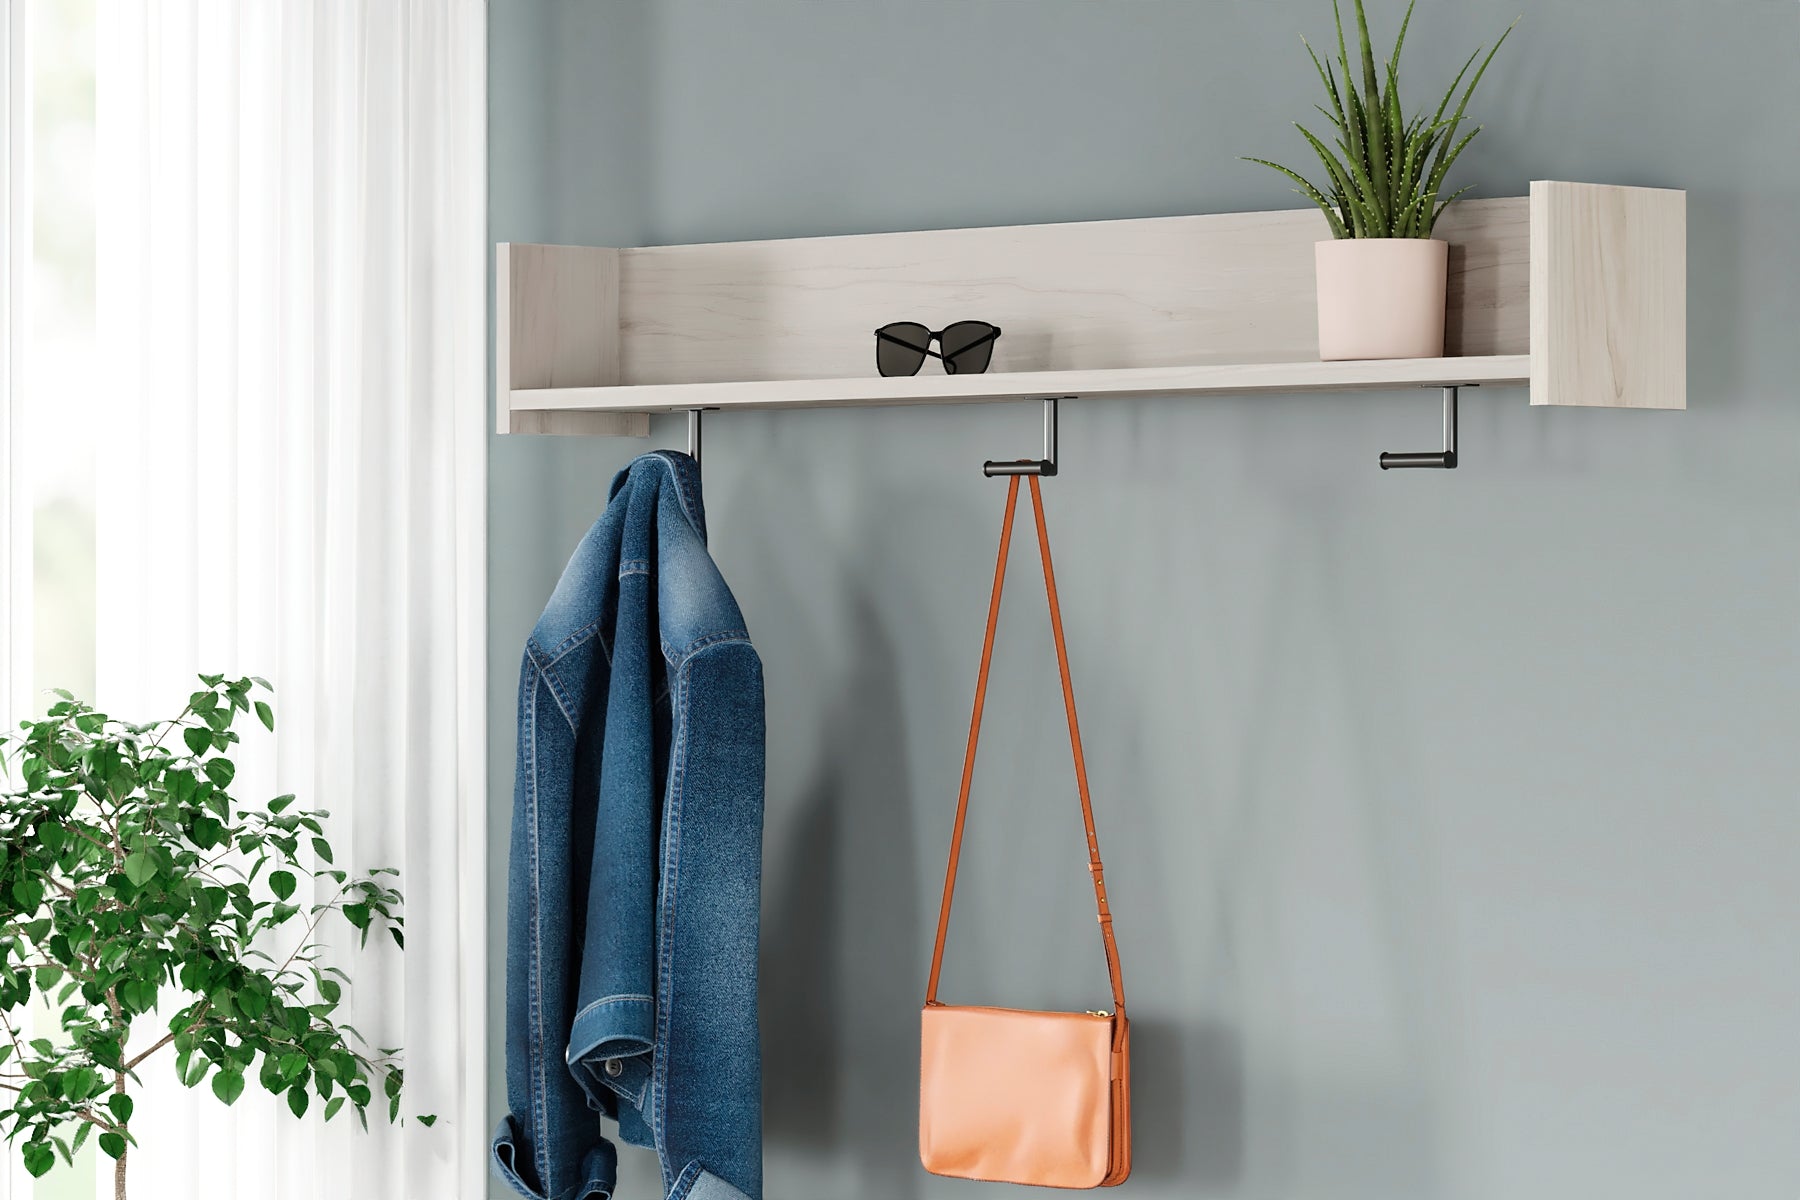 Integrating Sleek Shelves into Your Existing Decor